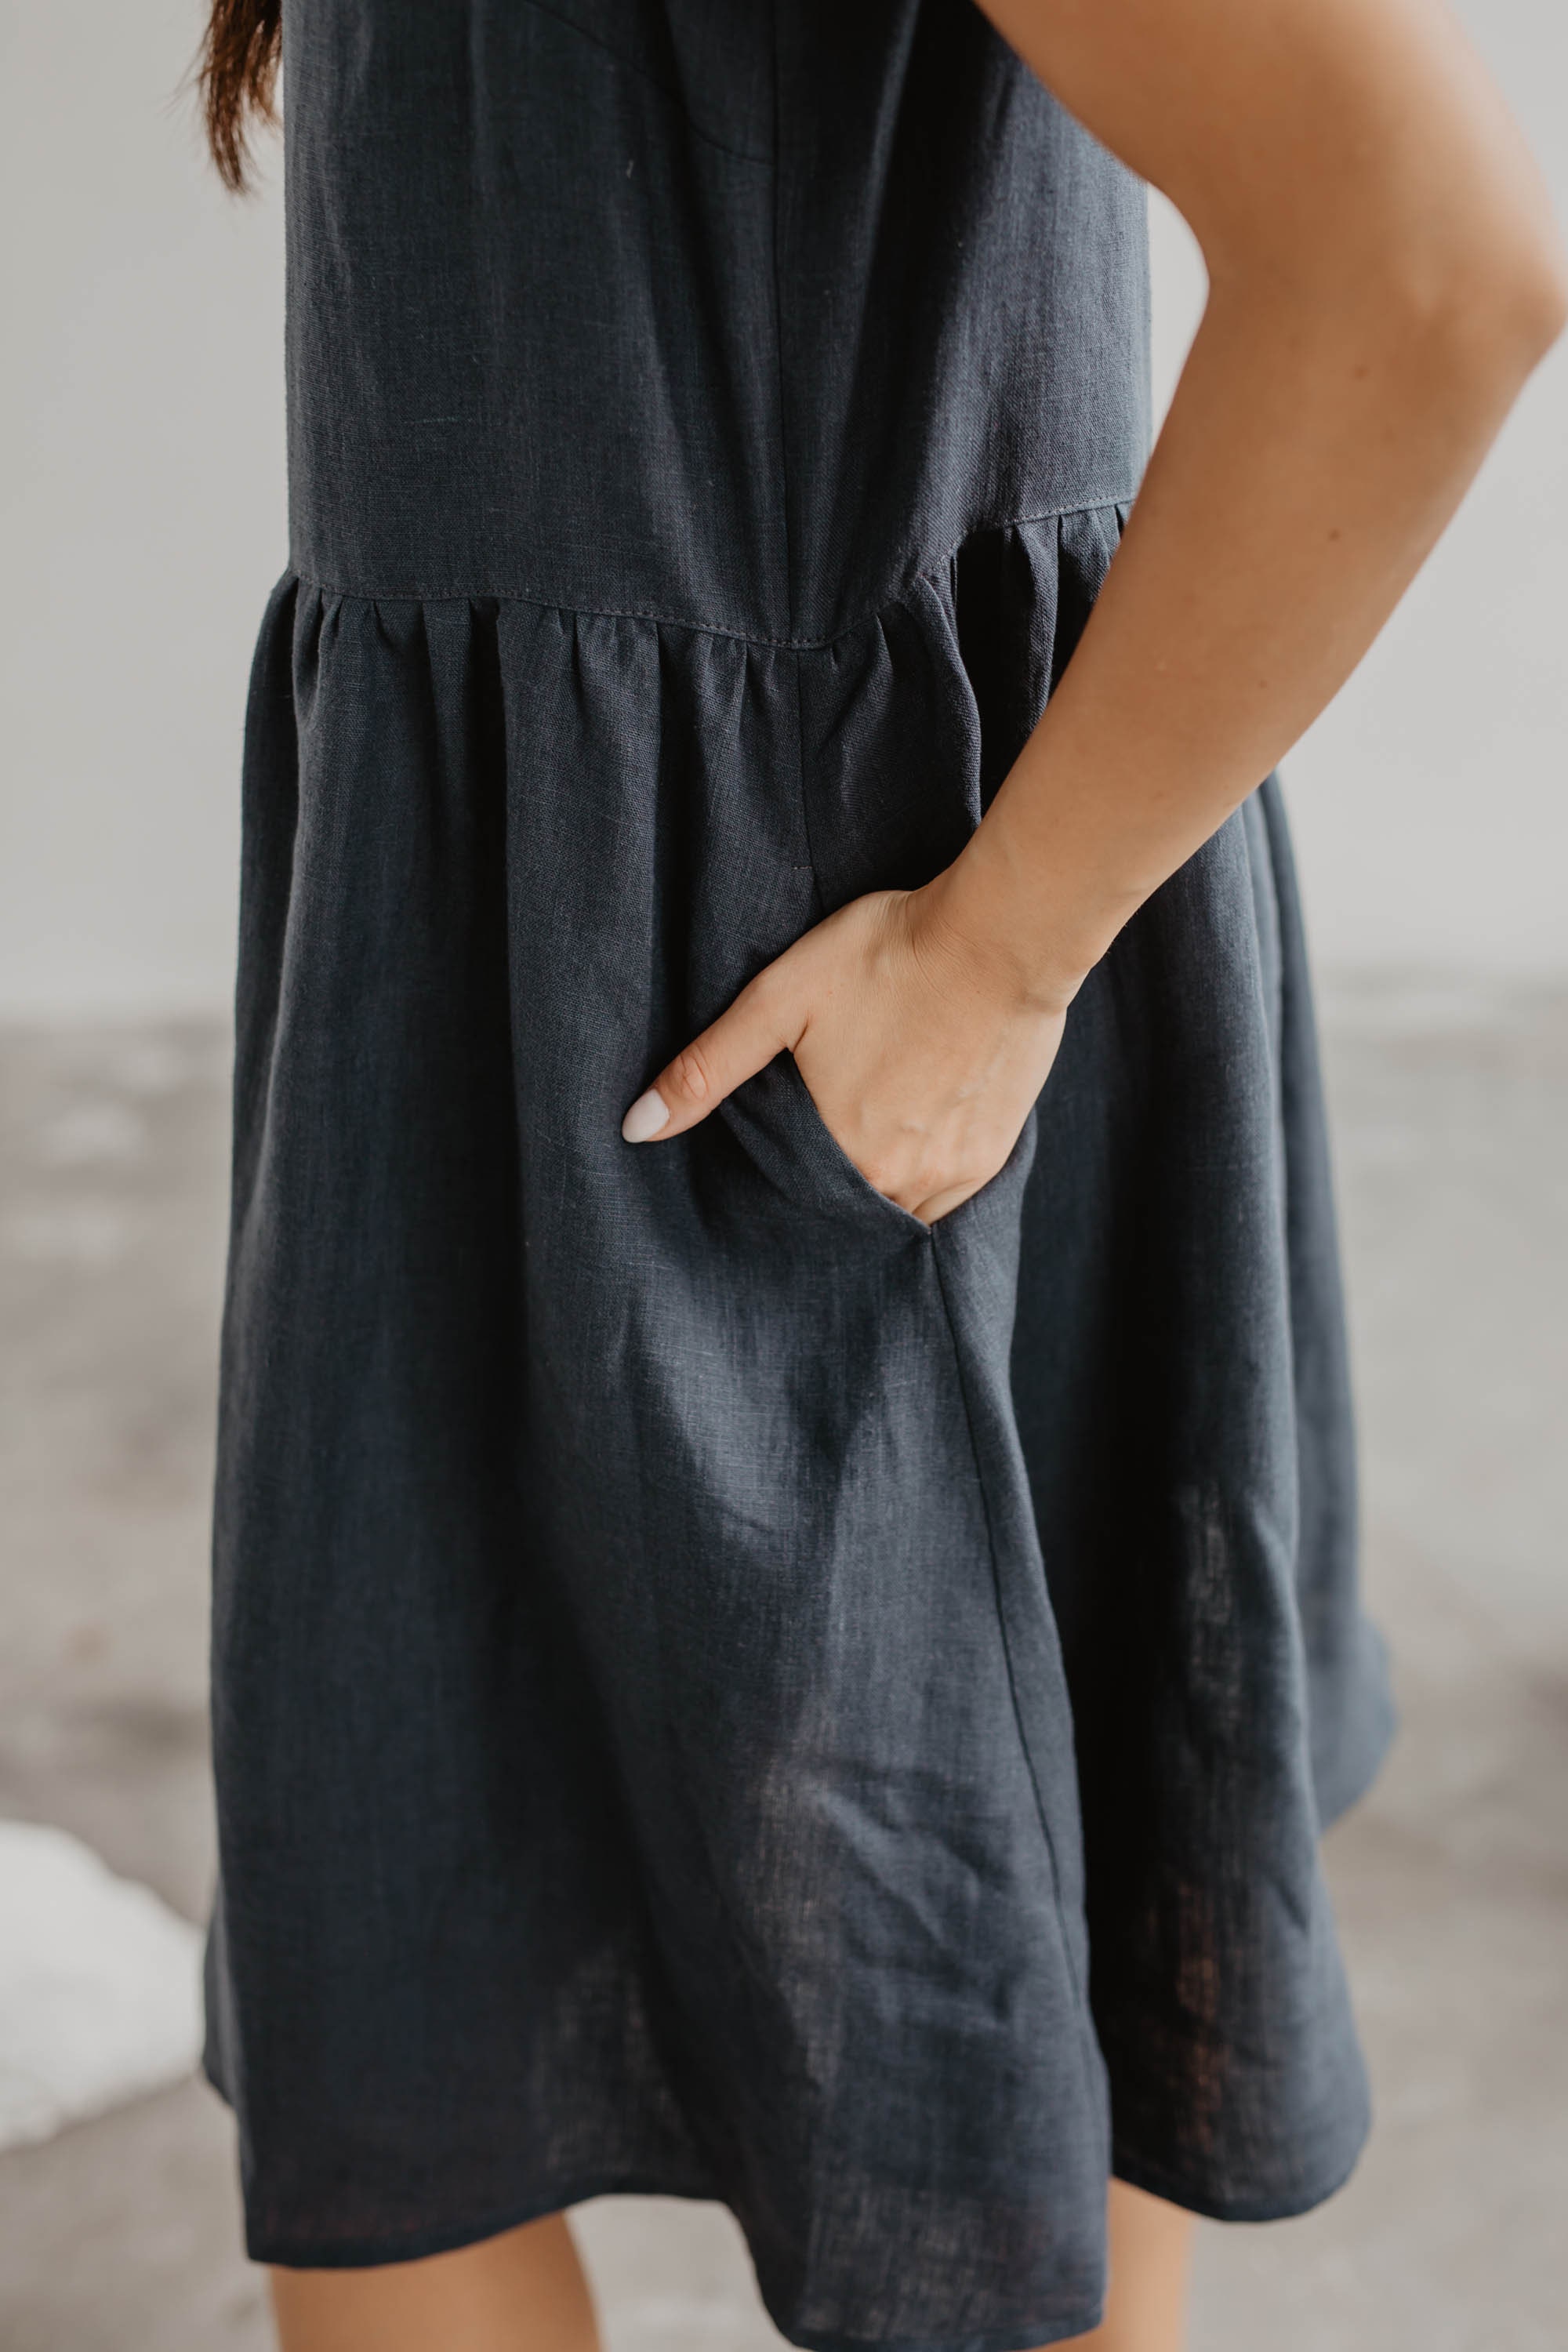 Linen August Dress – Jenni Kayne